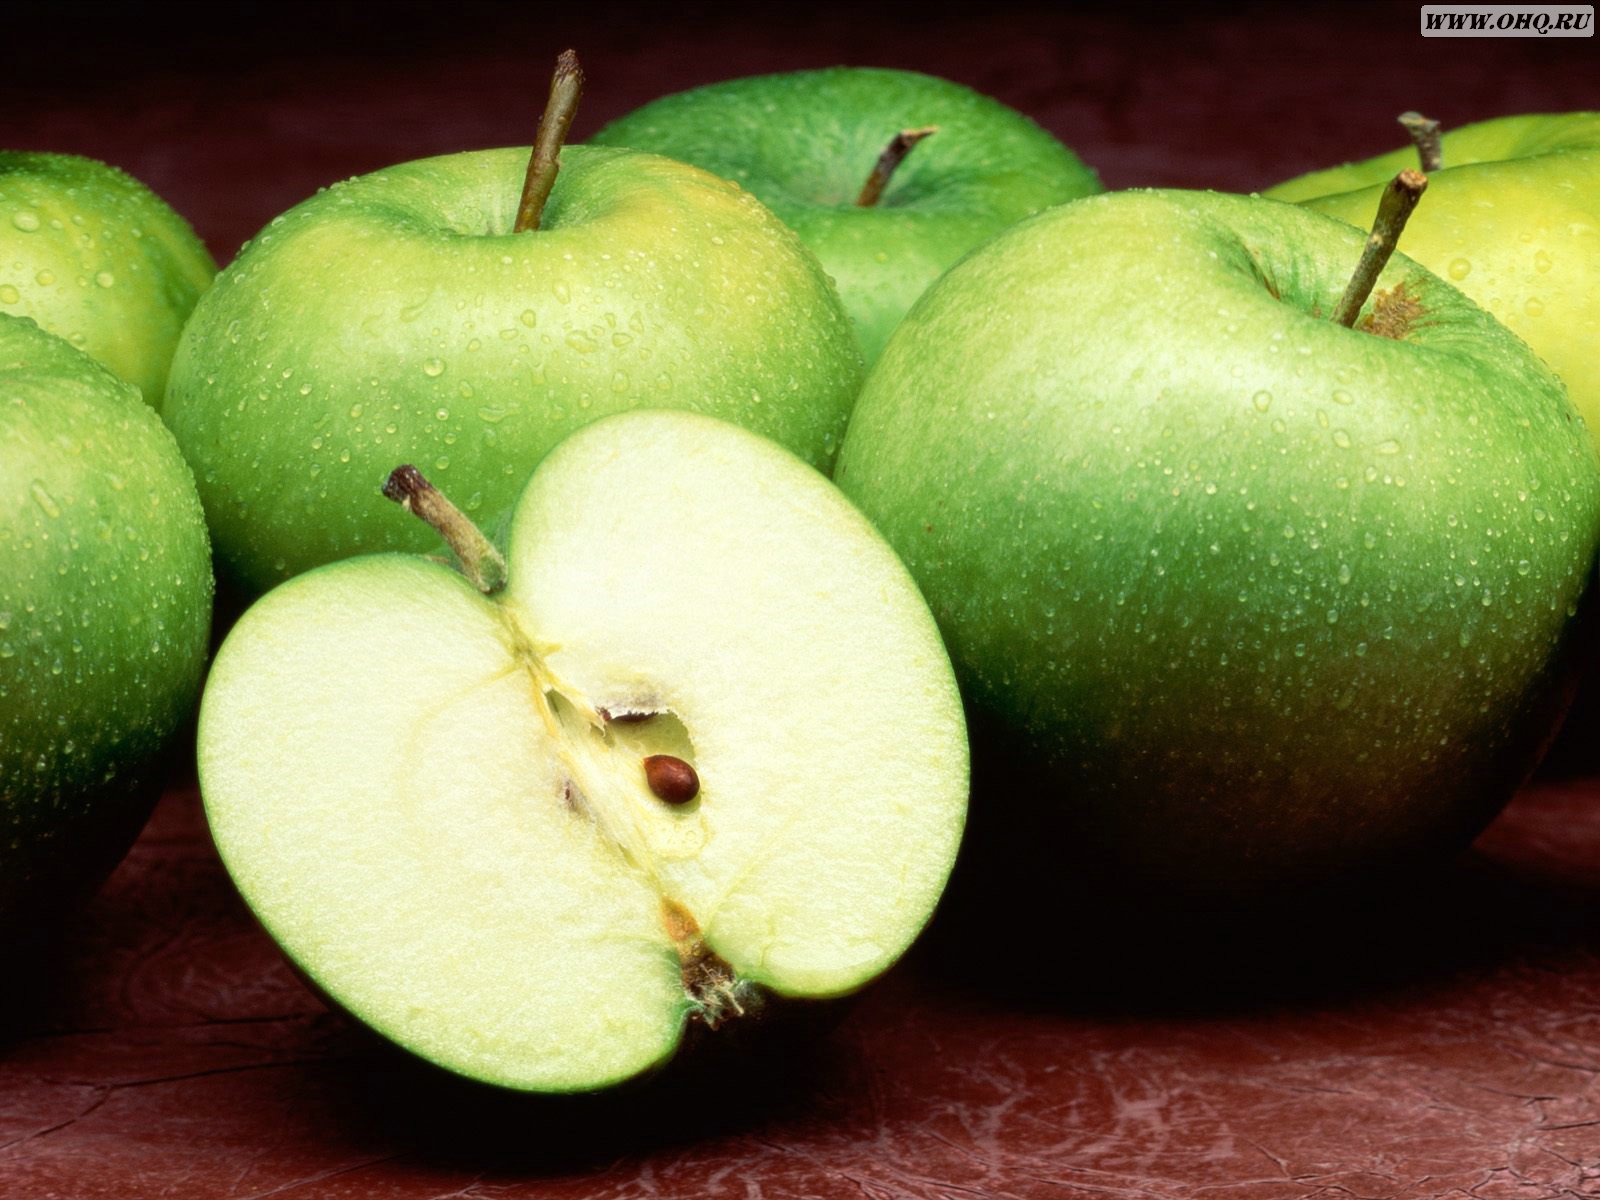 Wallpaper Of Fruits Green Apples World